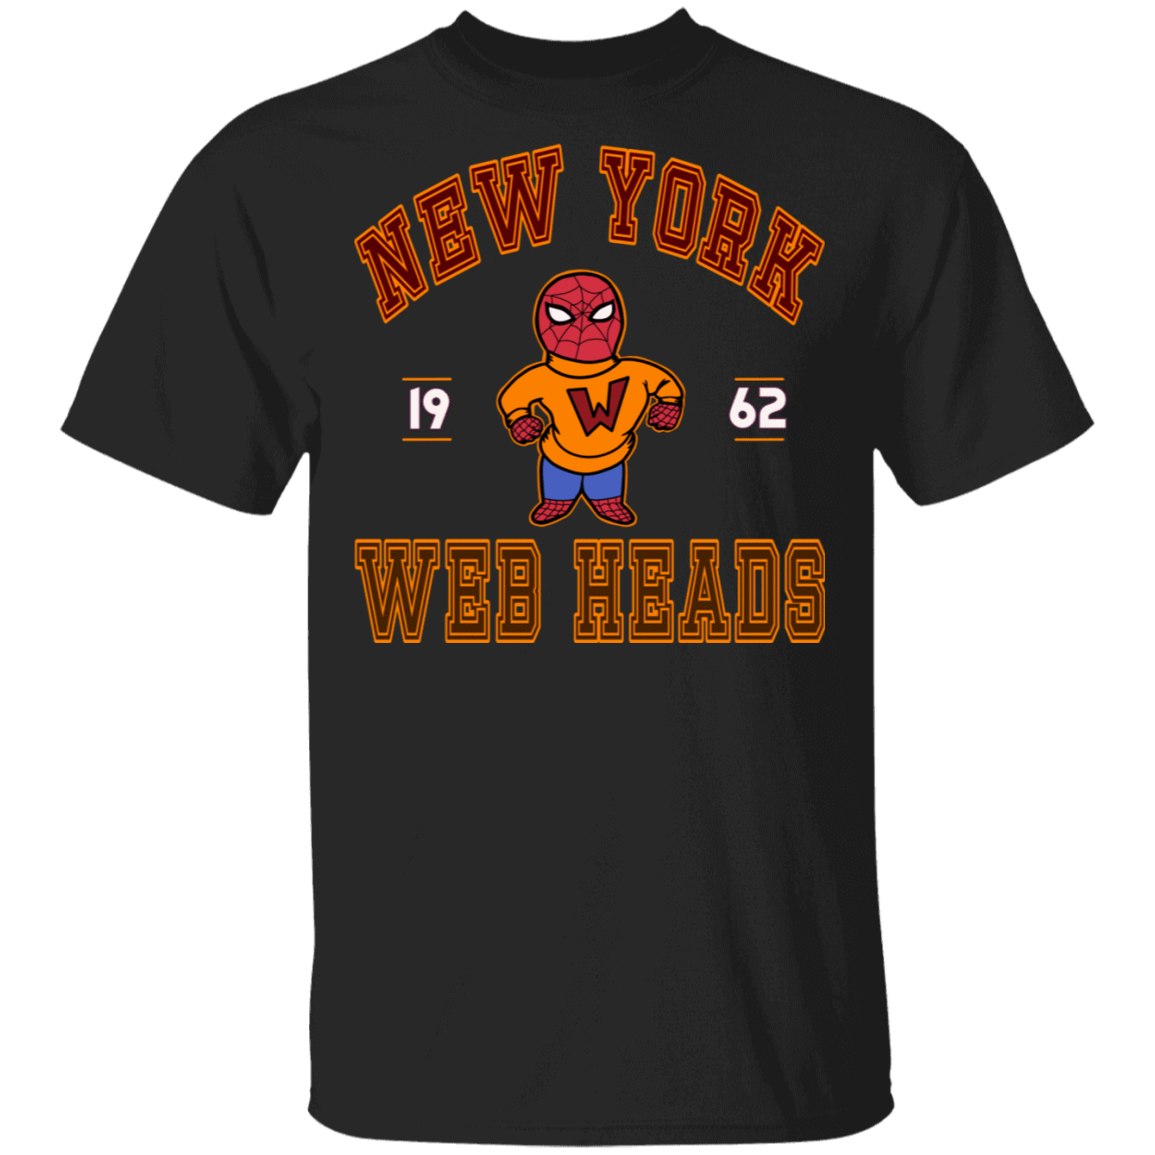 T-Shirts Black / S New York Web Heads T-Shirt